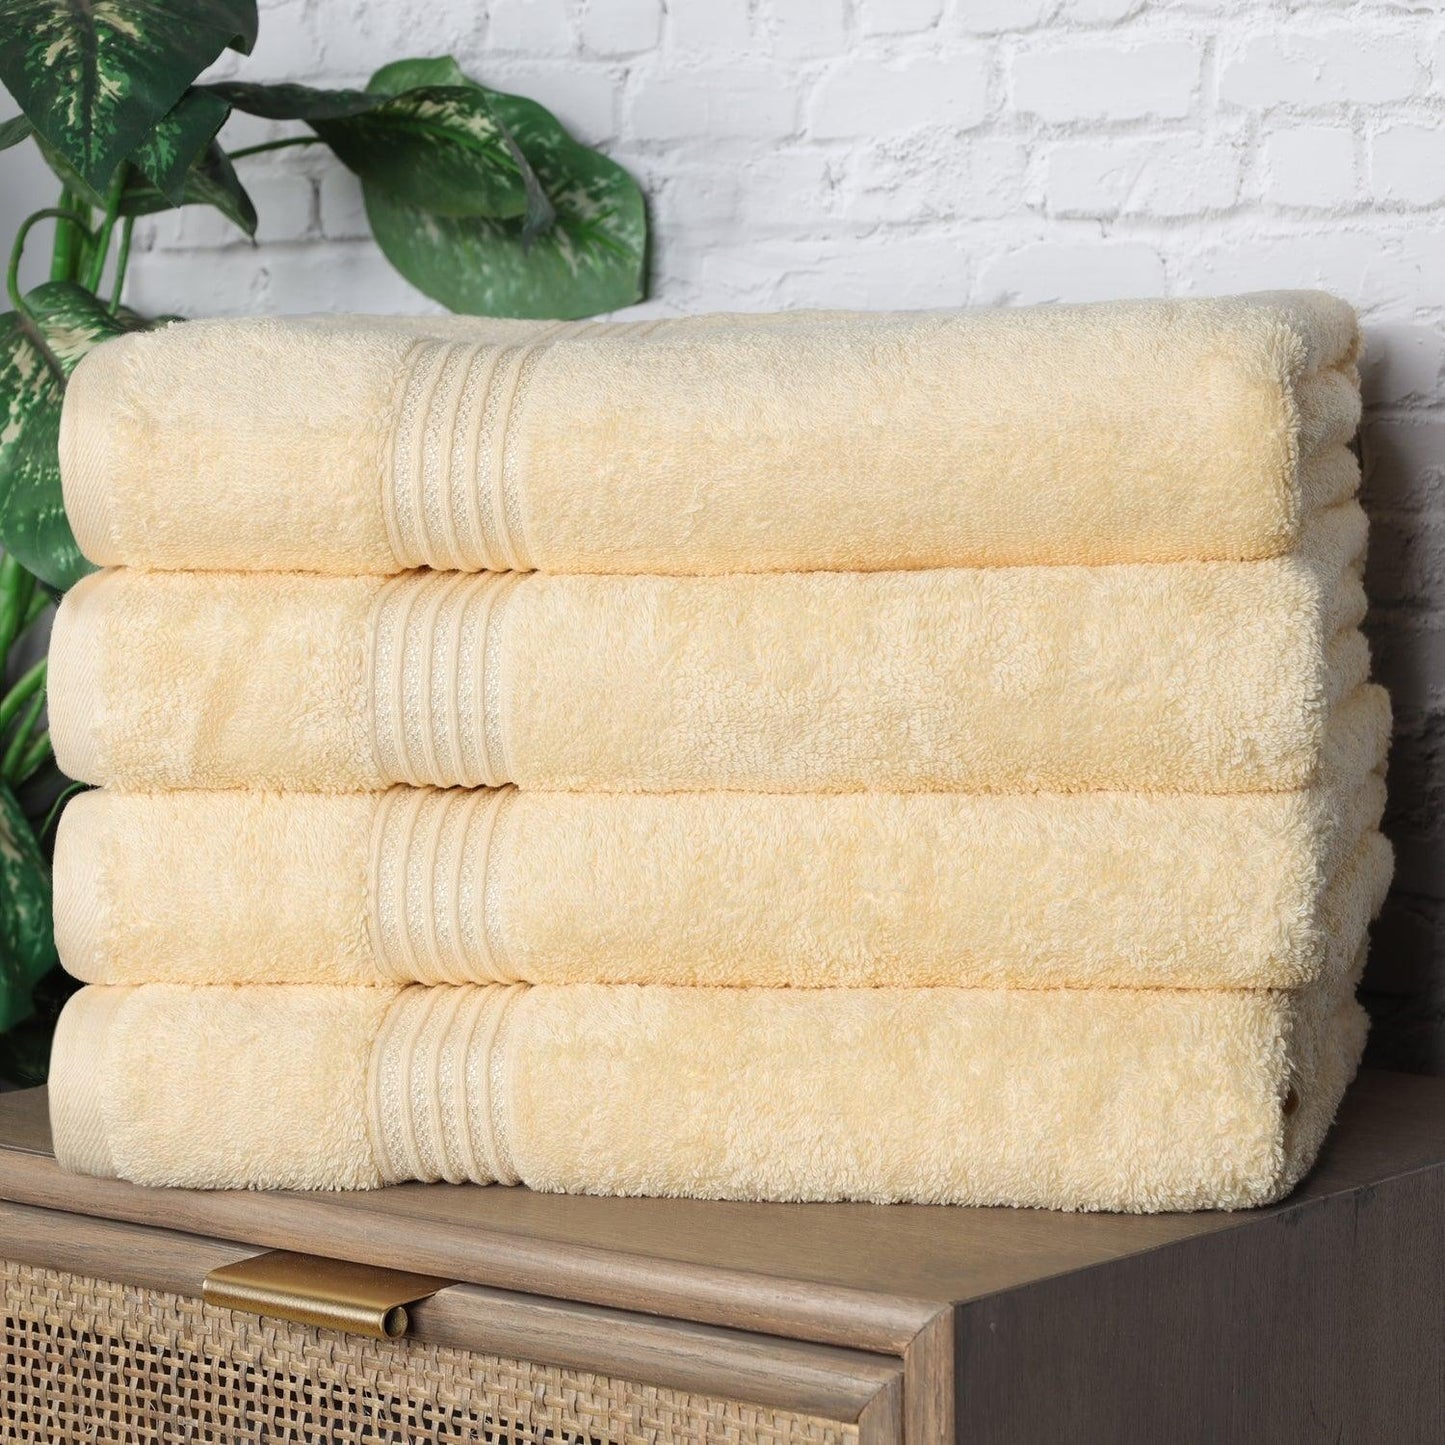 Egyptian Cotton 600 GSM, 4-Piece Bath Towel Set FredCo